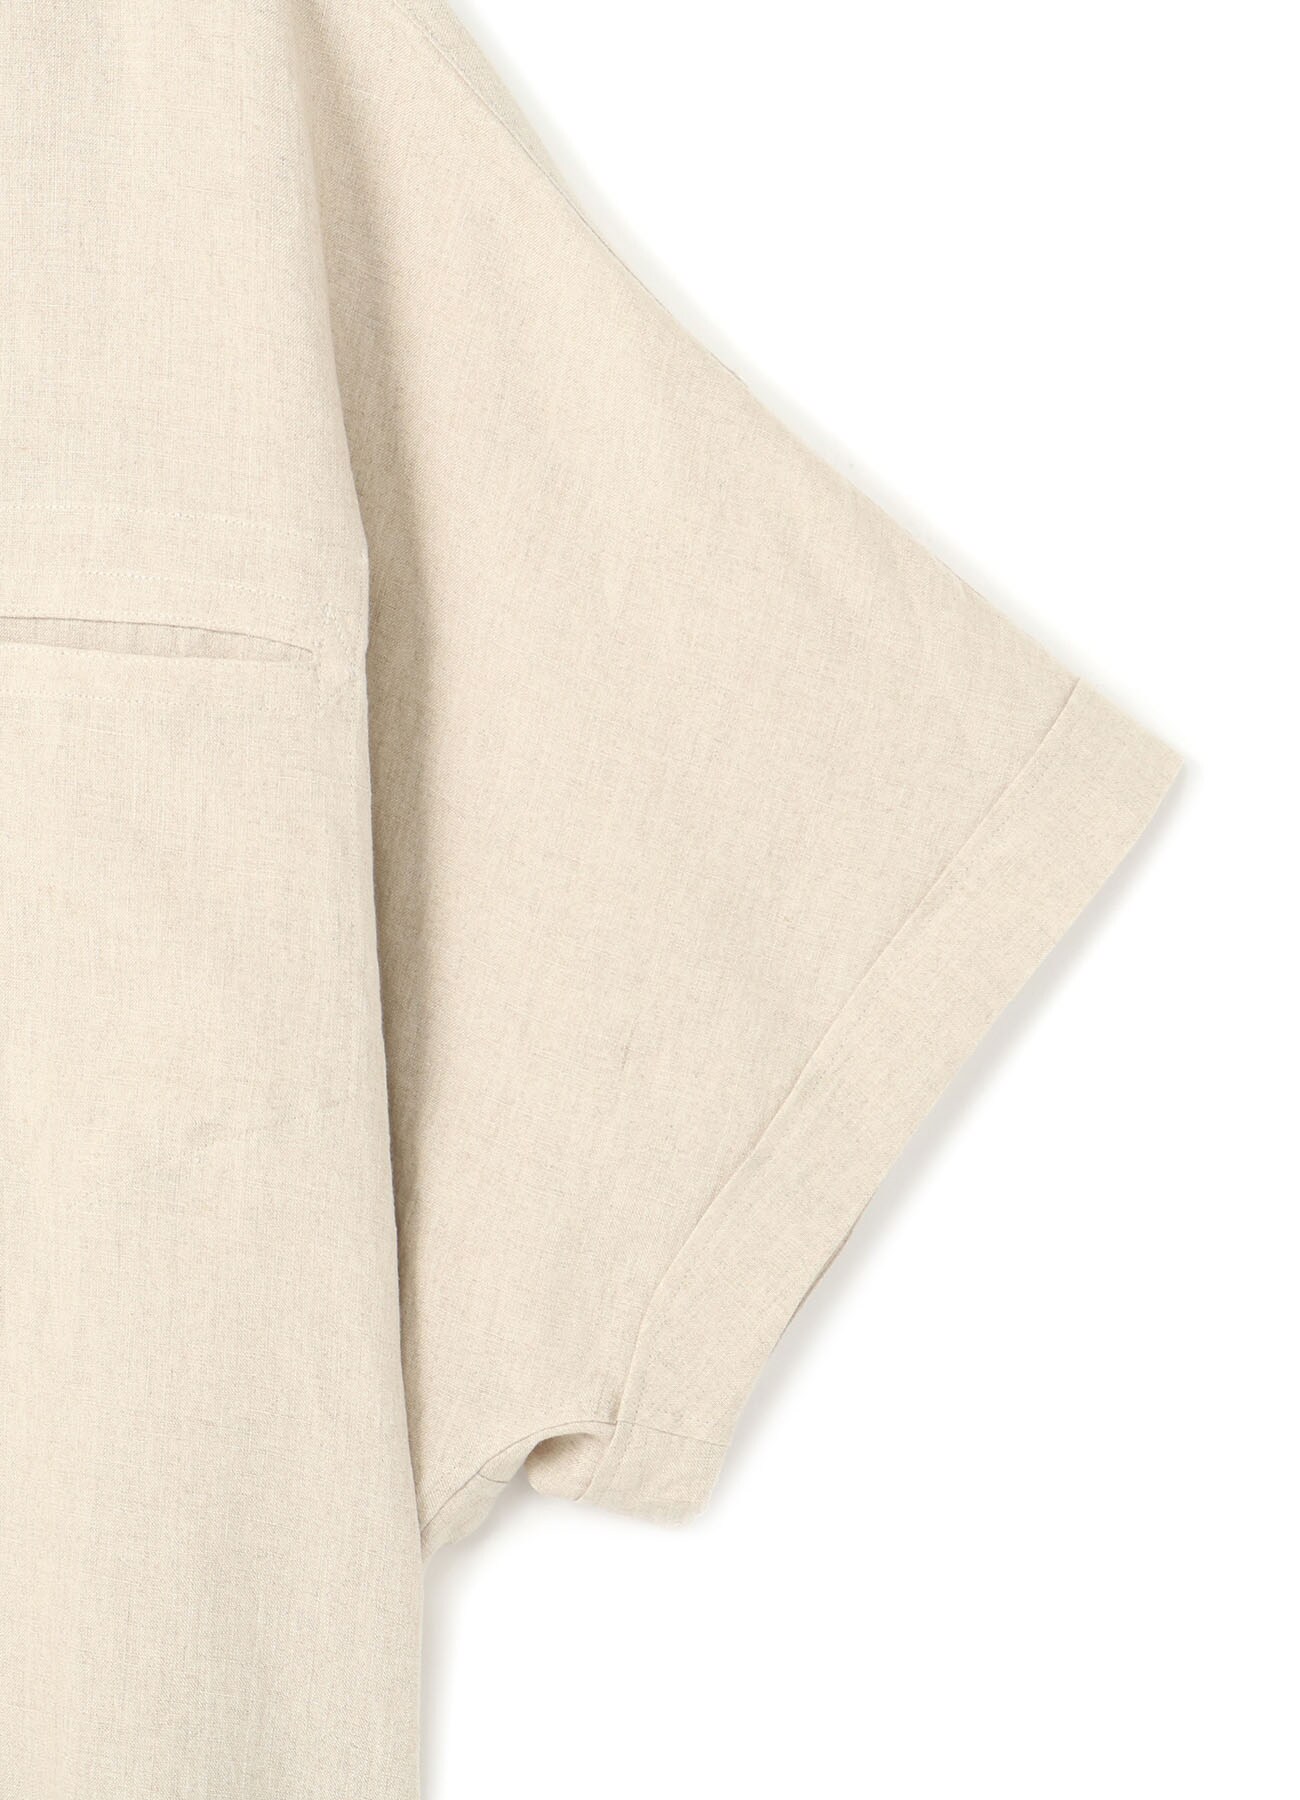 50/Linen cloth Dolman short sleeve shirt